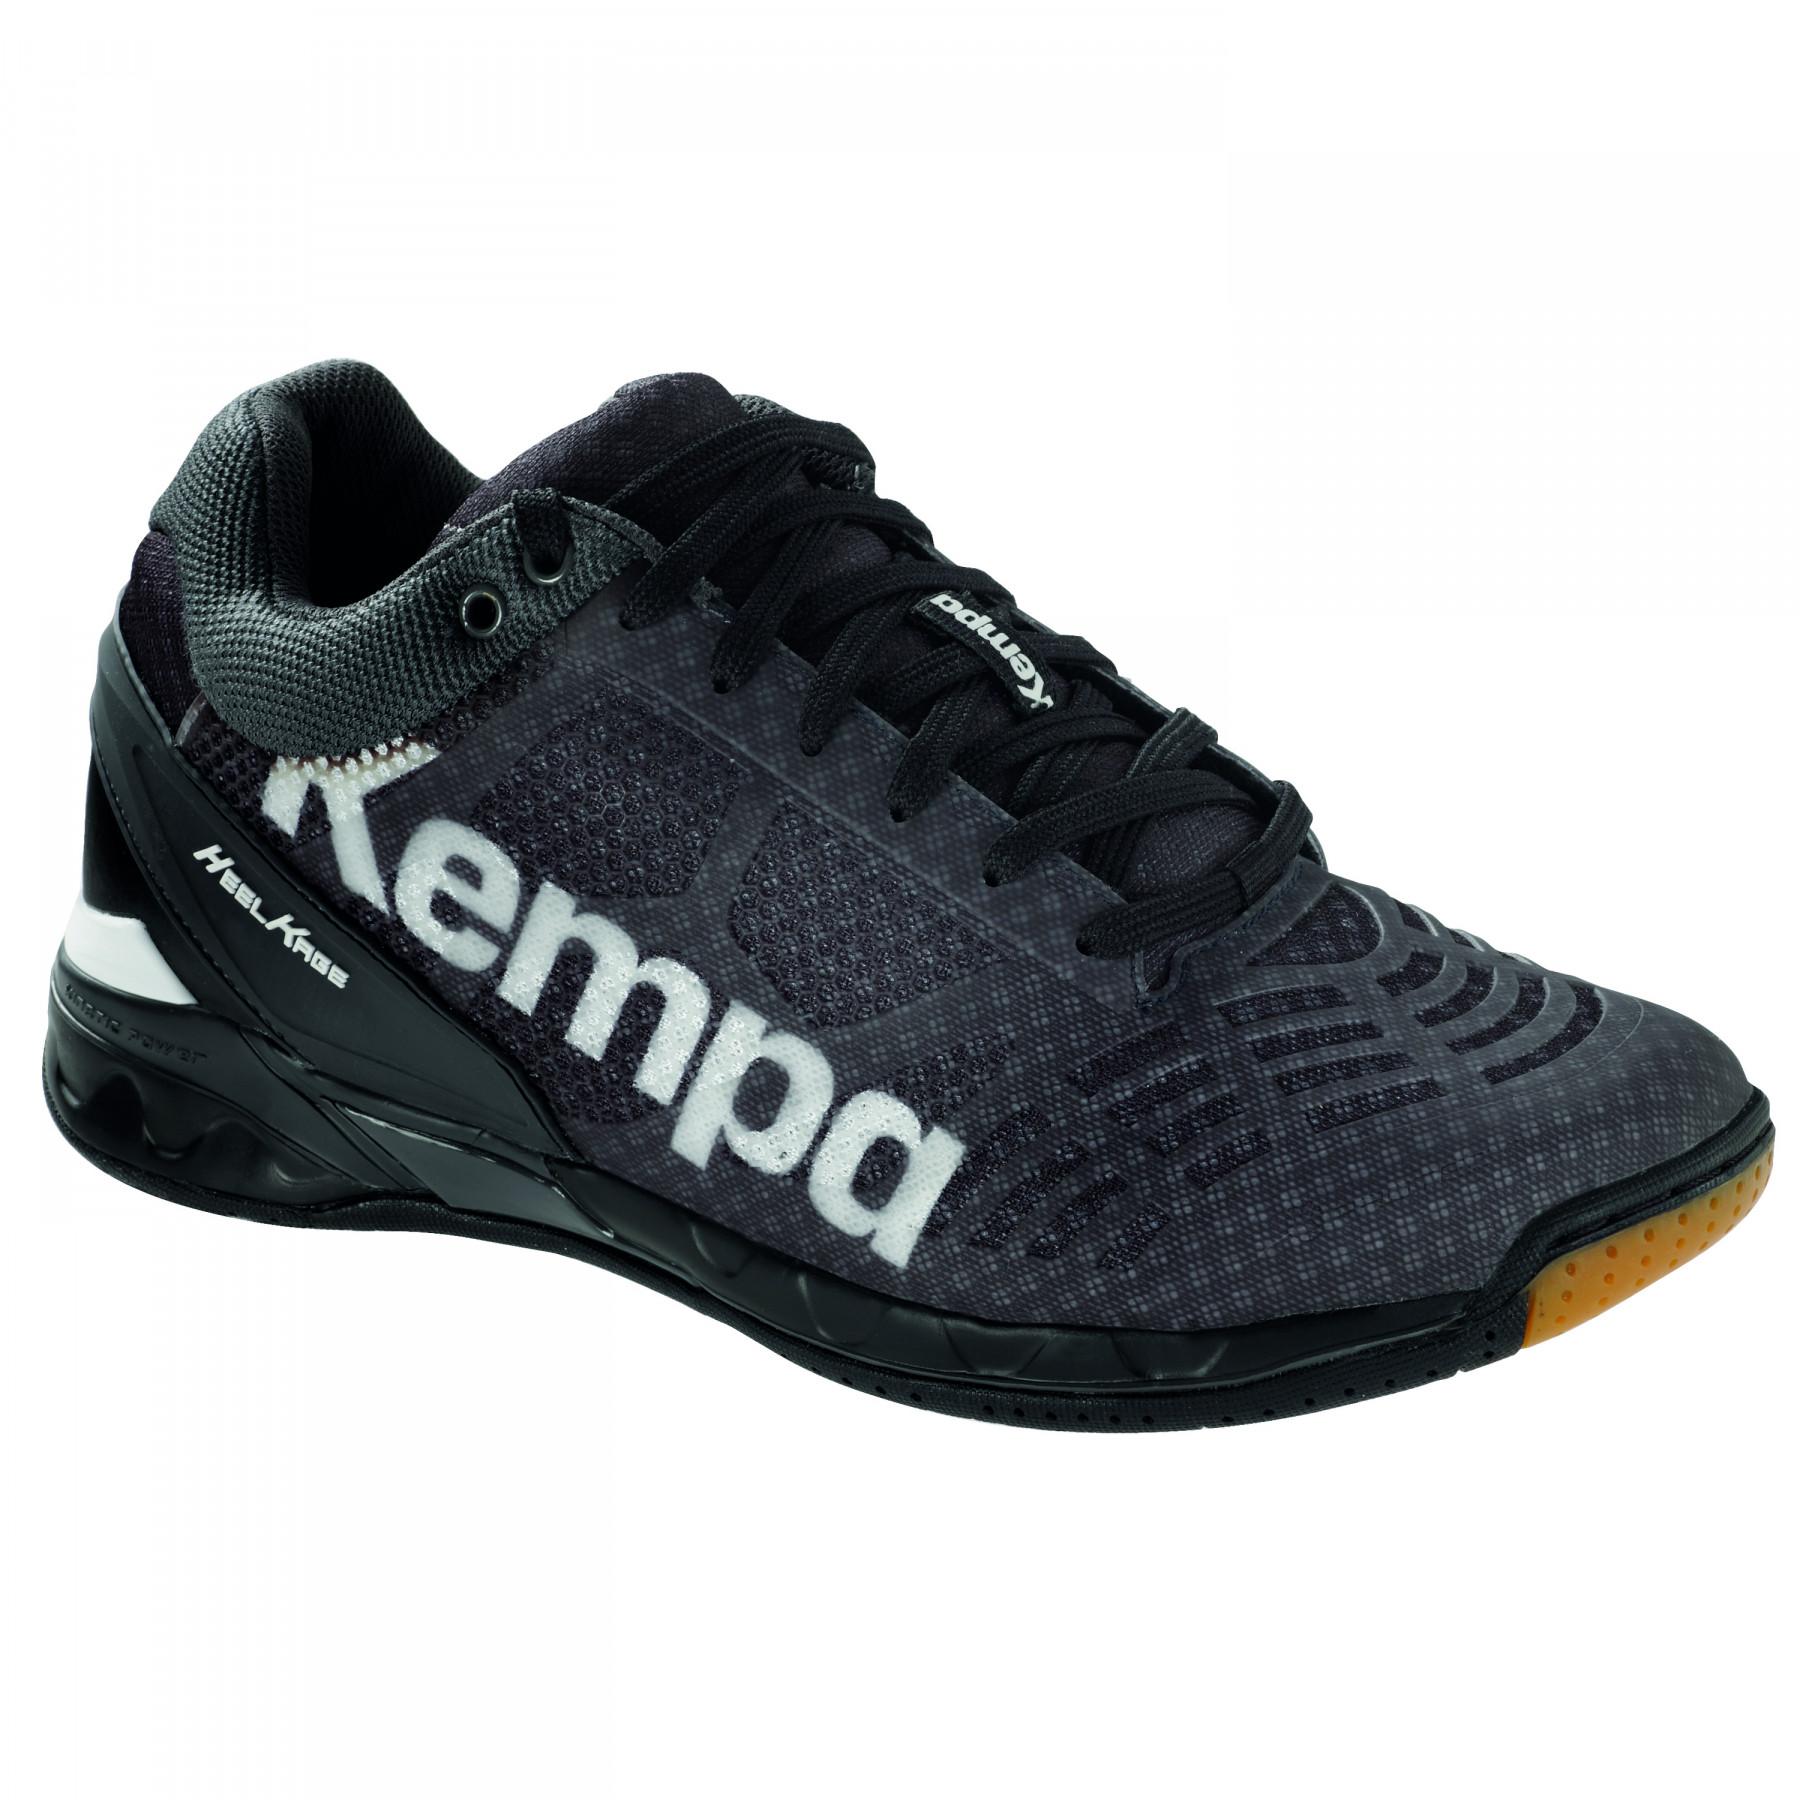 Schuhe Kempa Attack Midcut - Attack - Kempa